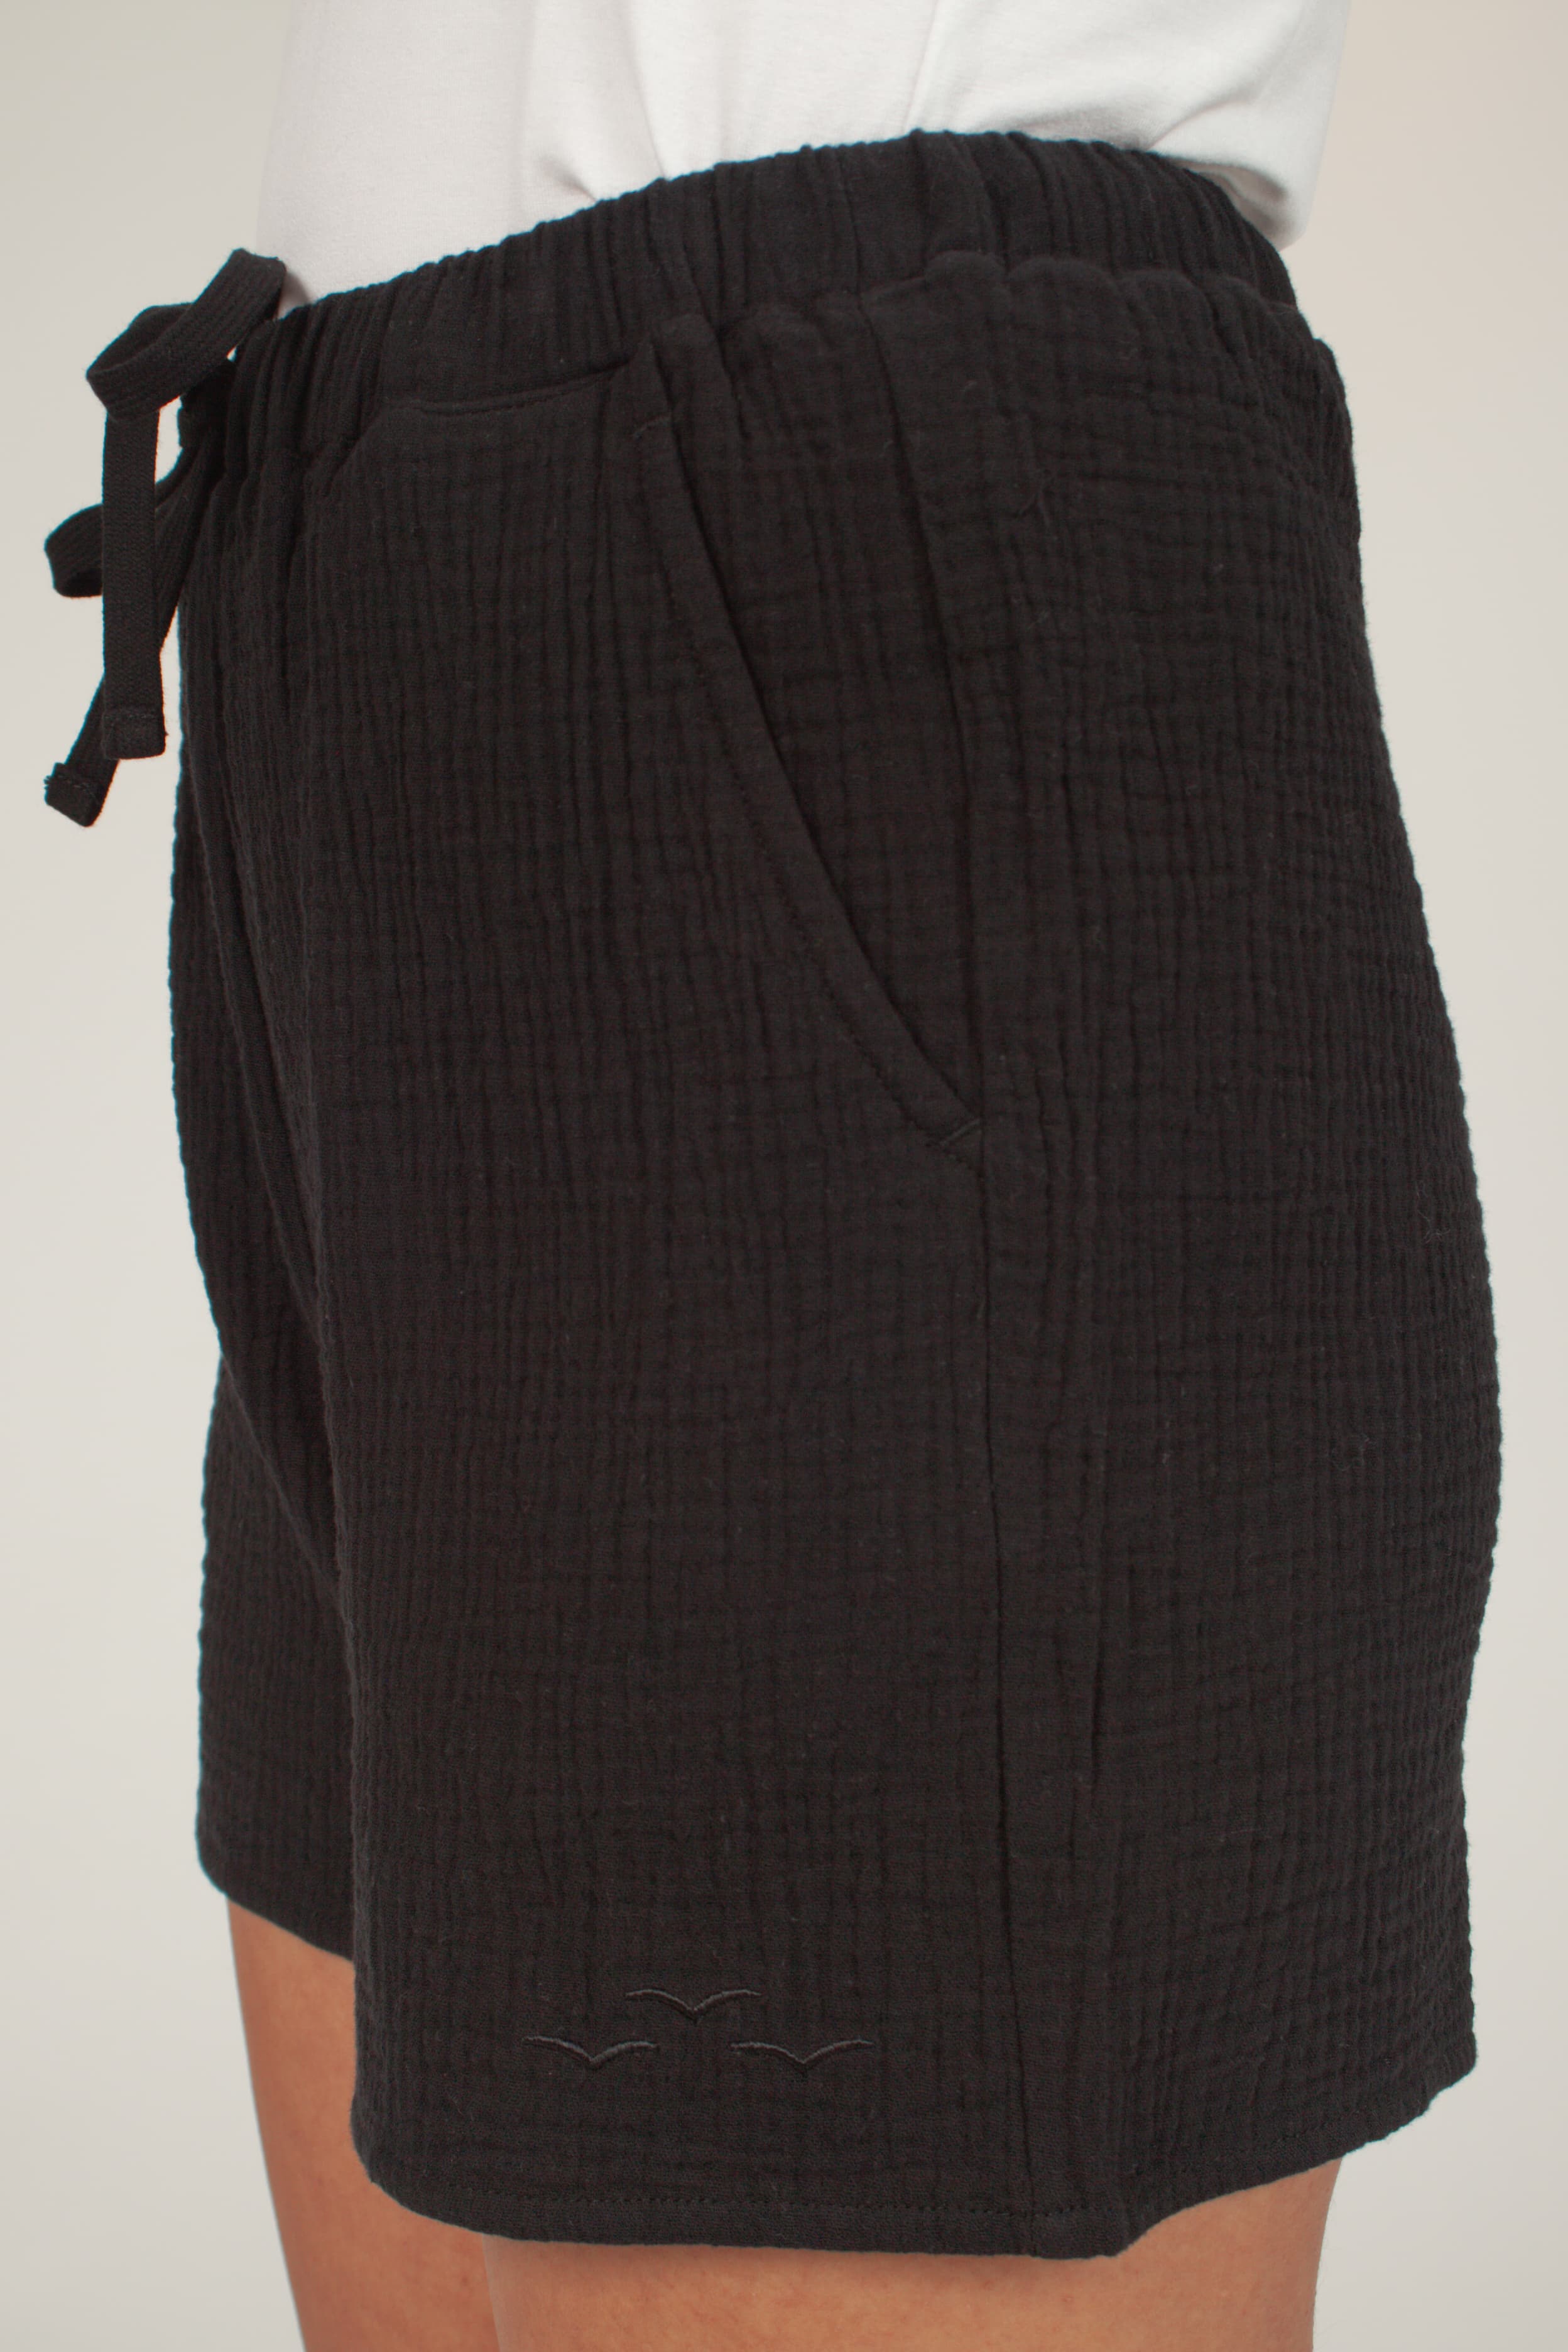 Lightweight Cotton Gauze black shirt and shorts set